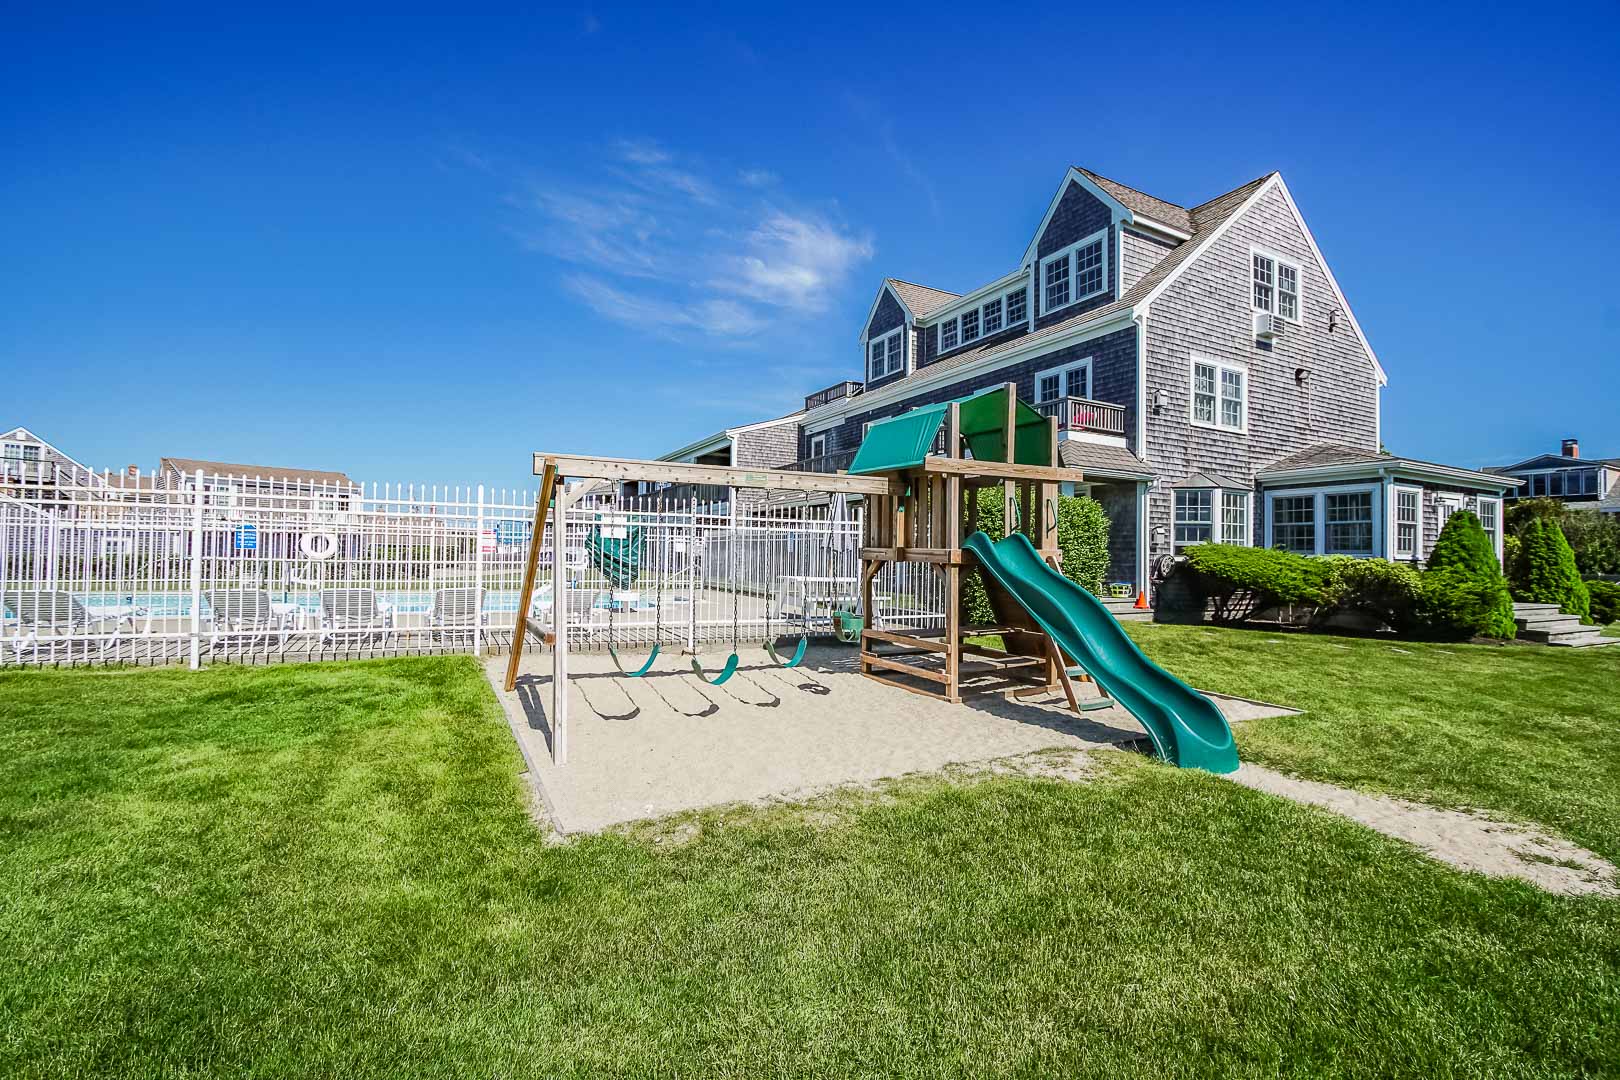 A lovely playground at VRI's Beachside Village Resort in Massachusetts.